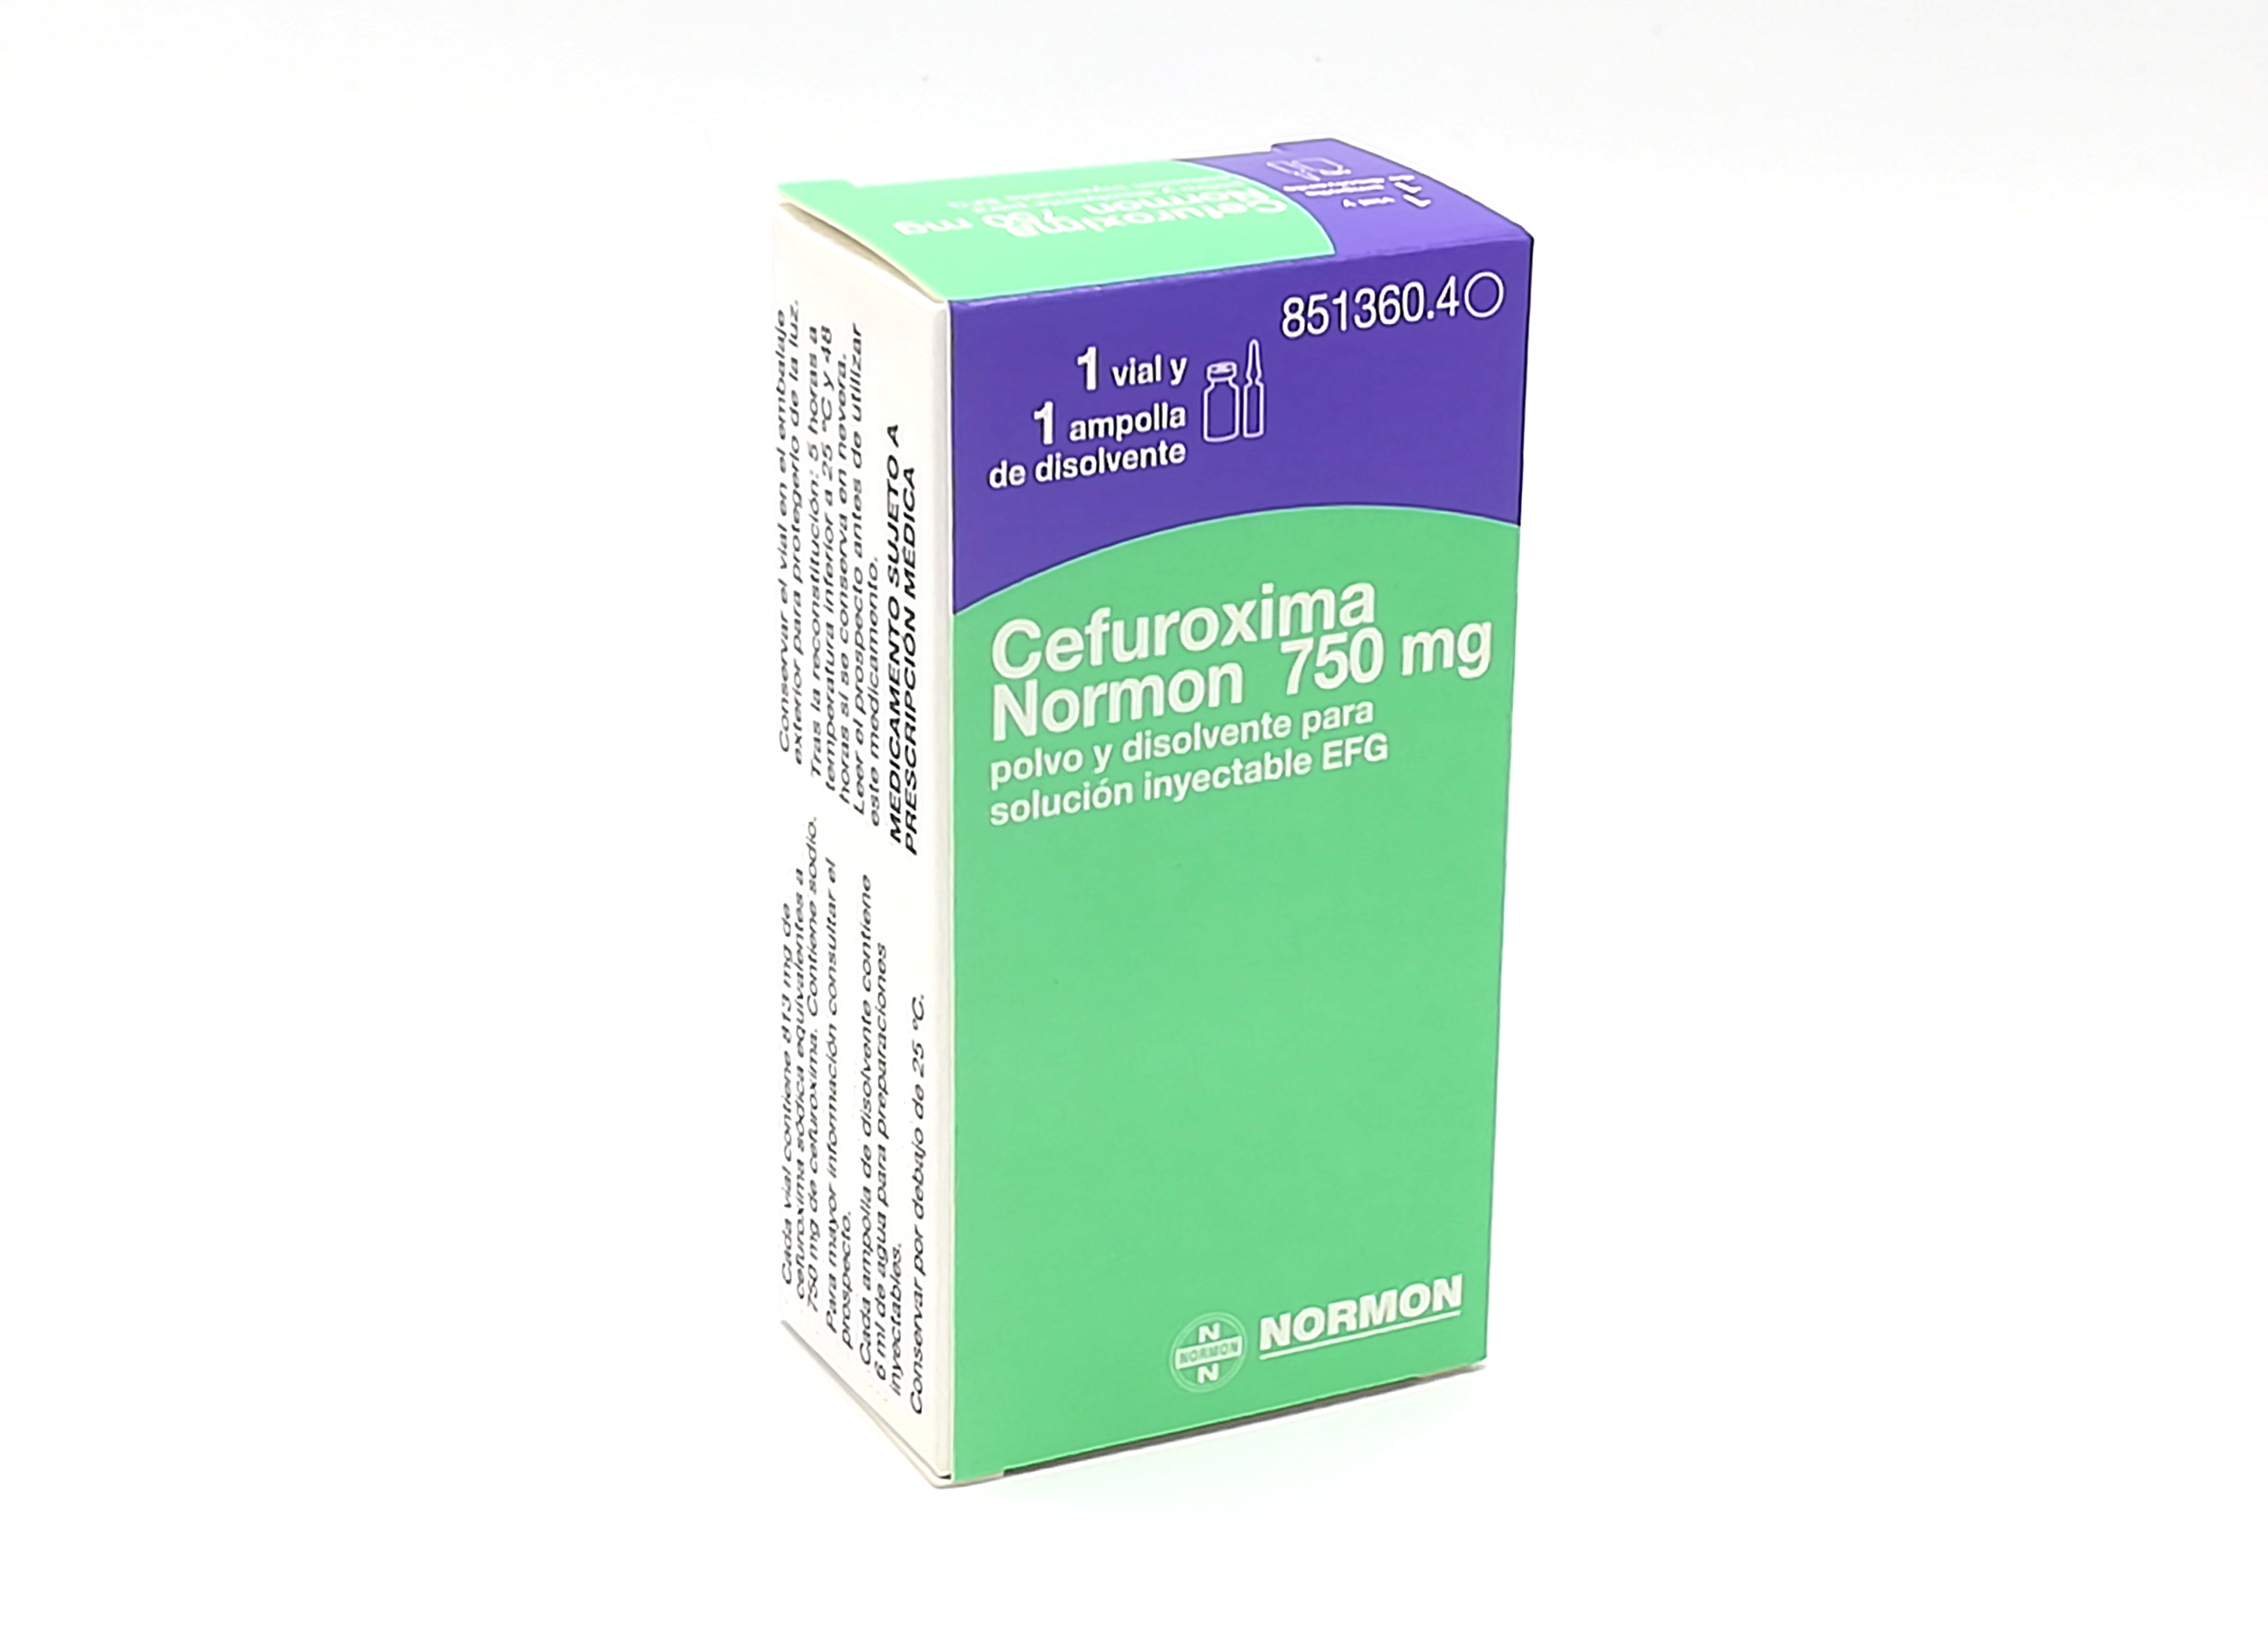 CEFUROXIMA NORMON EFG 750 mg 100 VIALES POLVO PARA SOLUCION INYECTABLE + 100 AMPOLLAS DISOLVENTE 6 ml